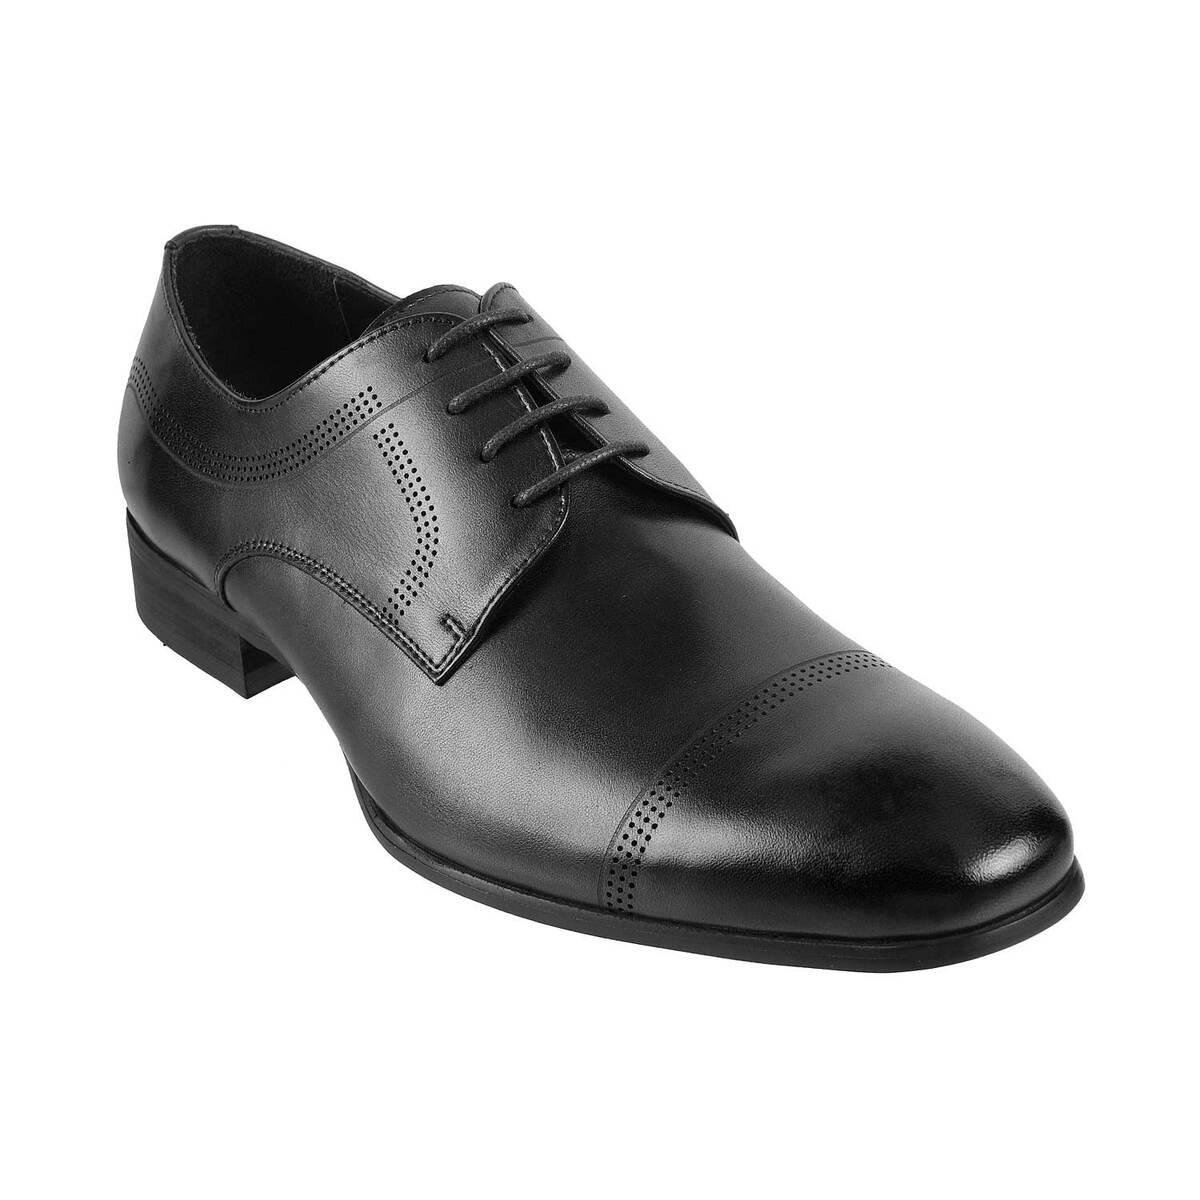 Buy Men Black Formal Oxford Online | SKU: 14-1123-11-40-Metro Shoes